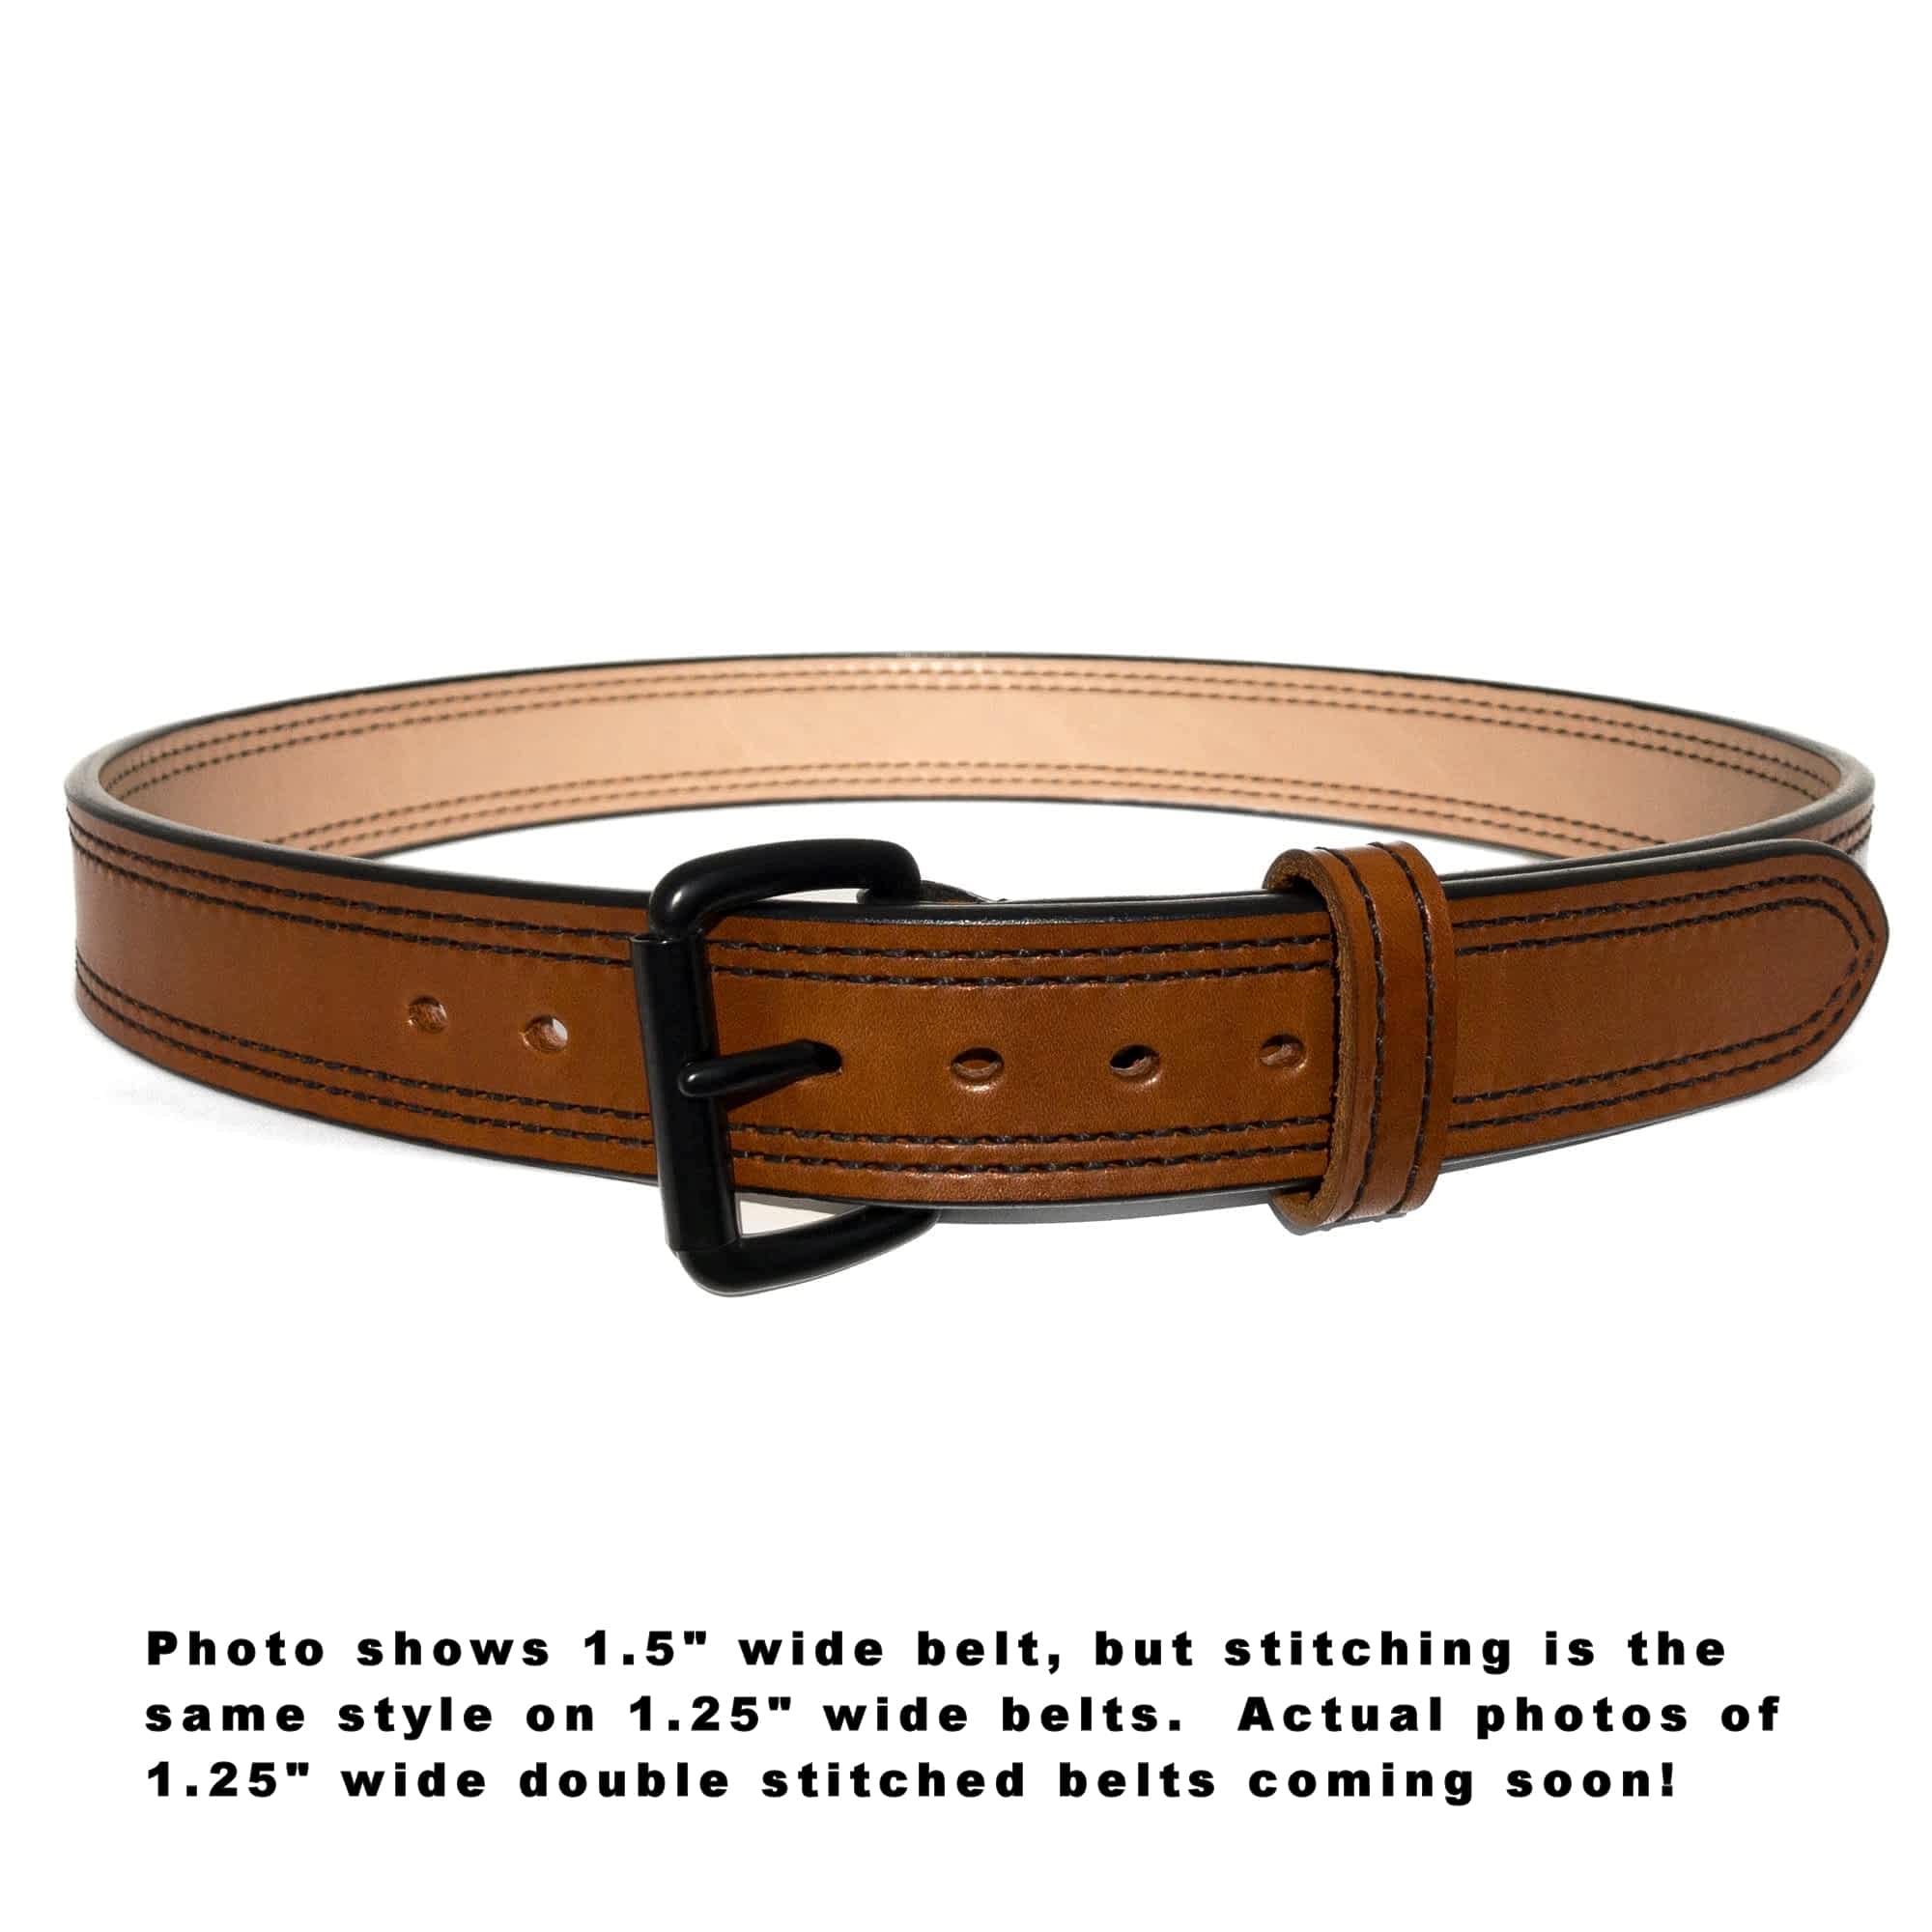 Buy D-Belt 2 Tactical Belt 1.25 at Best Price